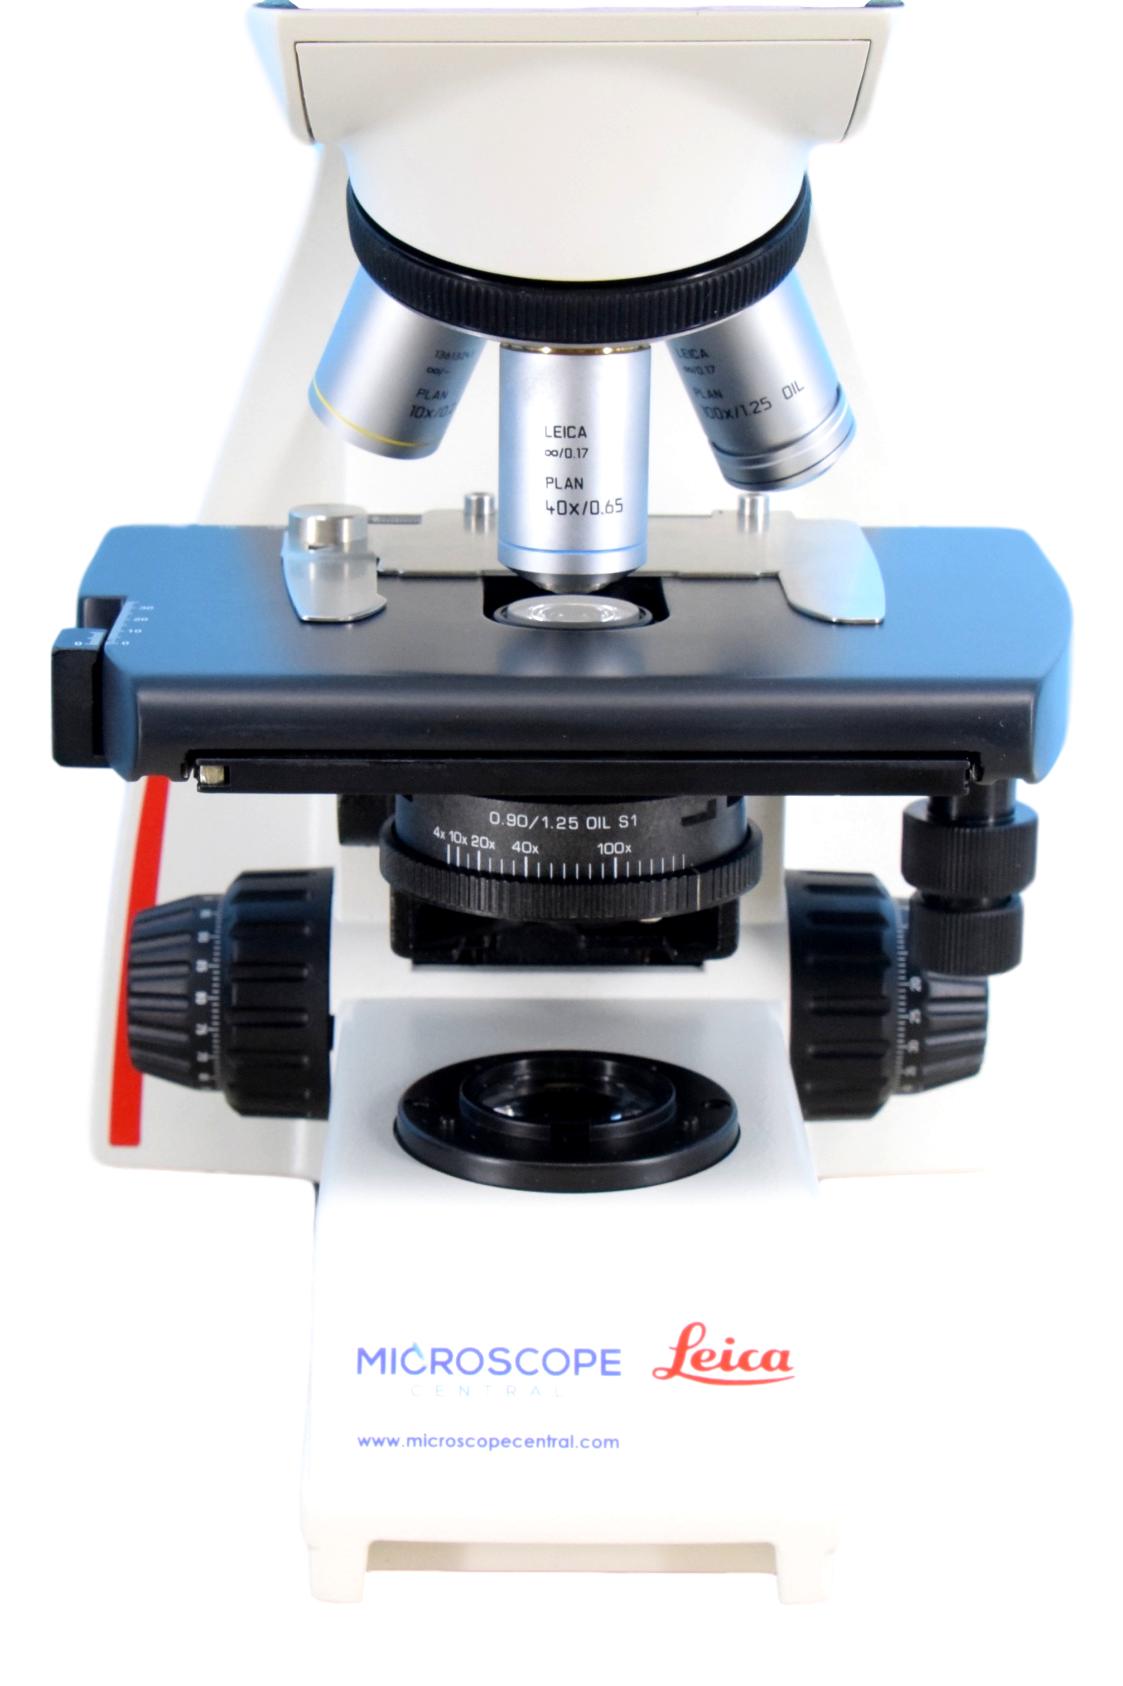 Leica DM500 Used Microscope